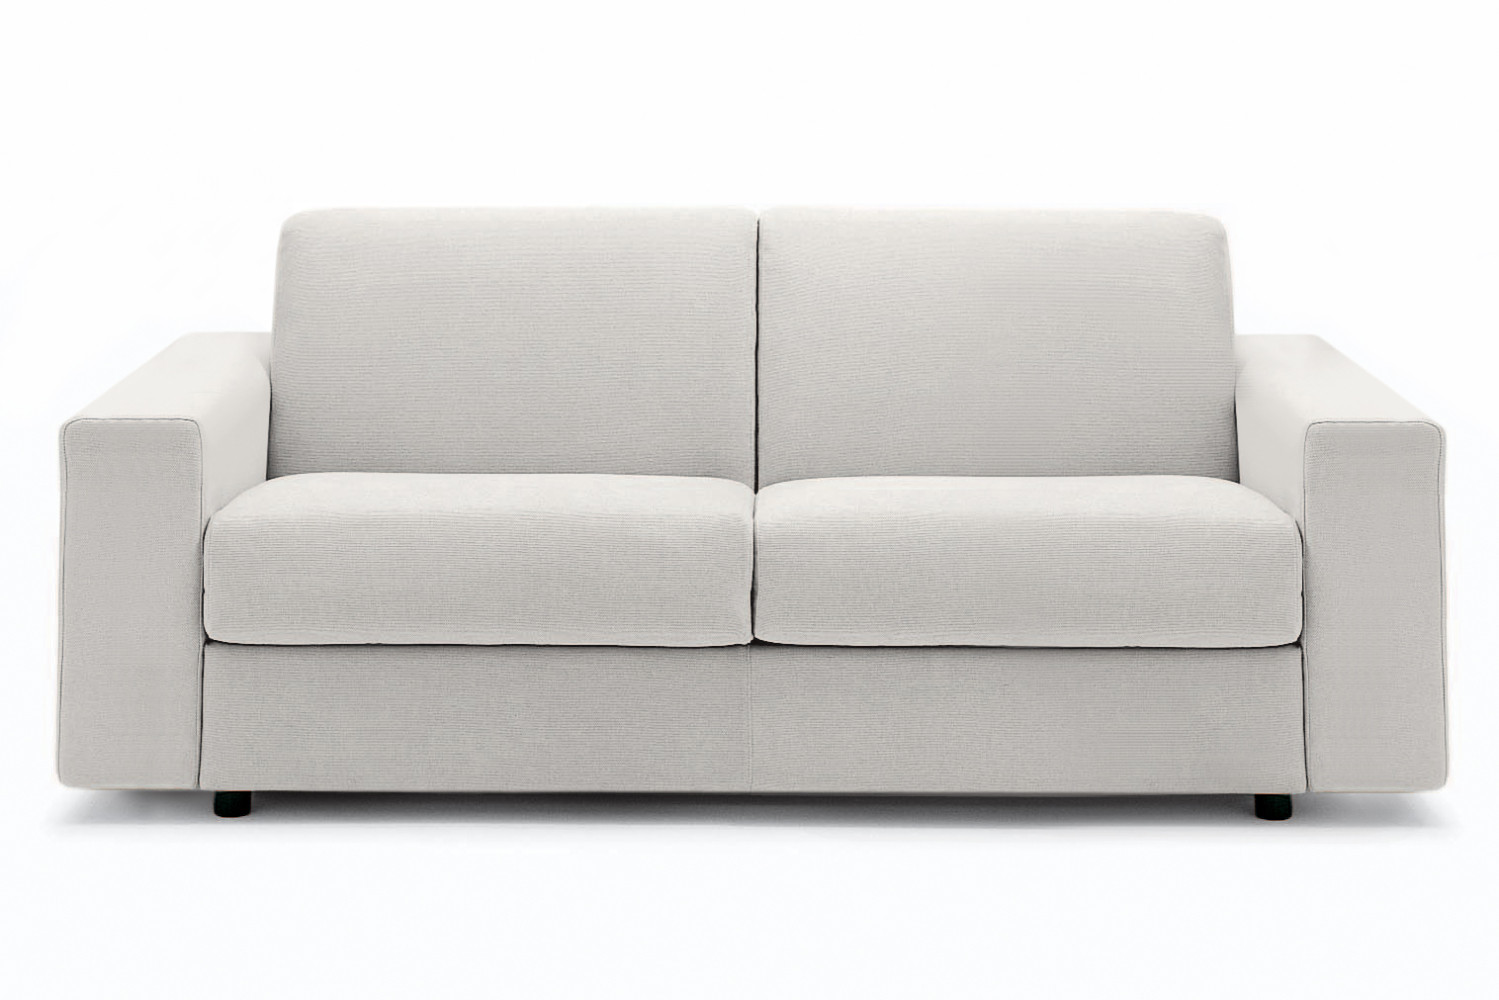 lampolet sofa bed australia